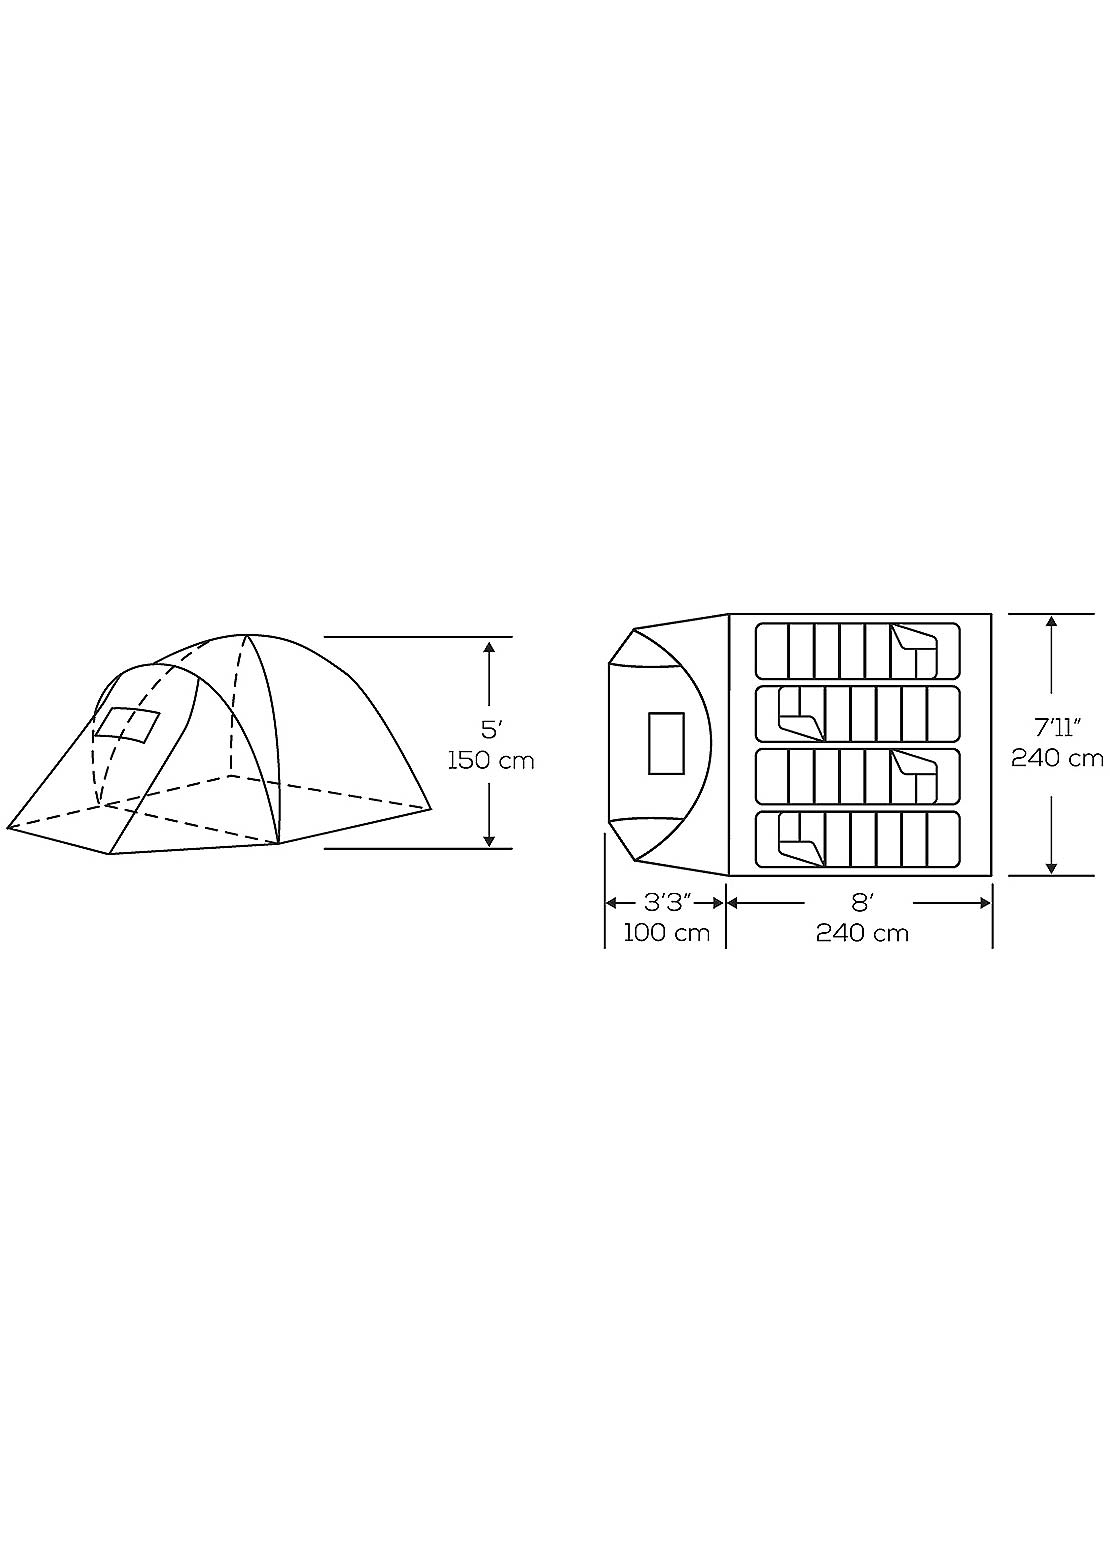 Kuma Outdoor Gear Tekarra 4 Tent